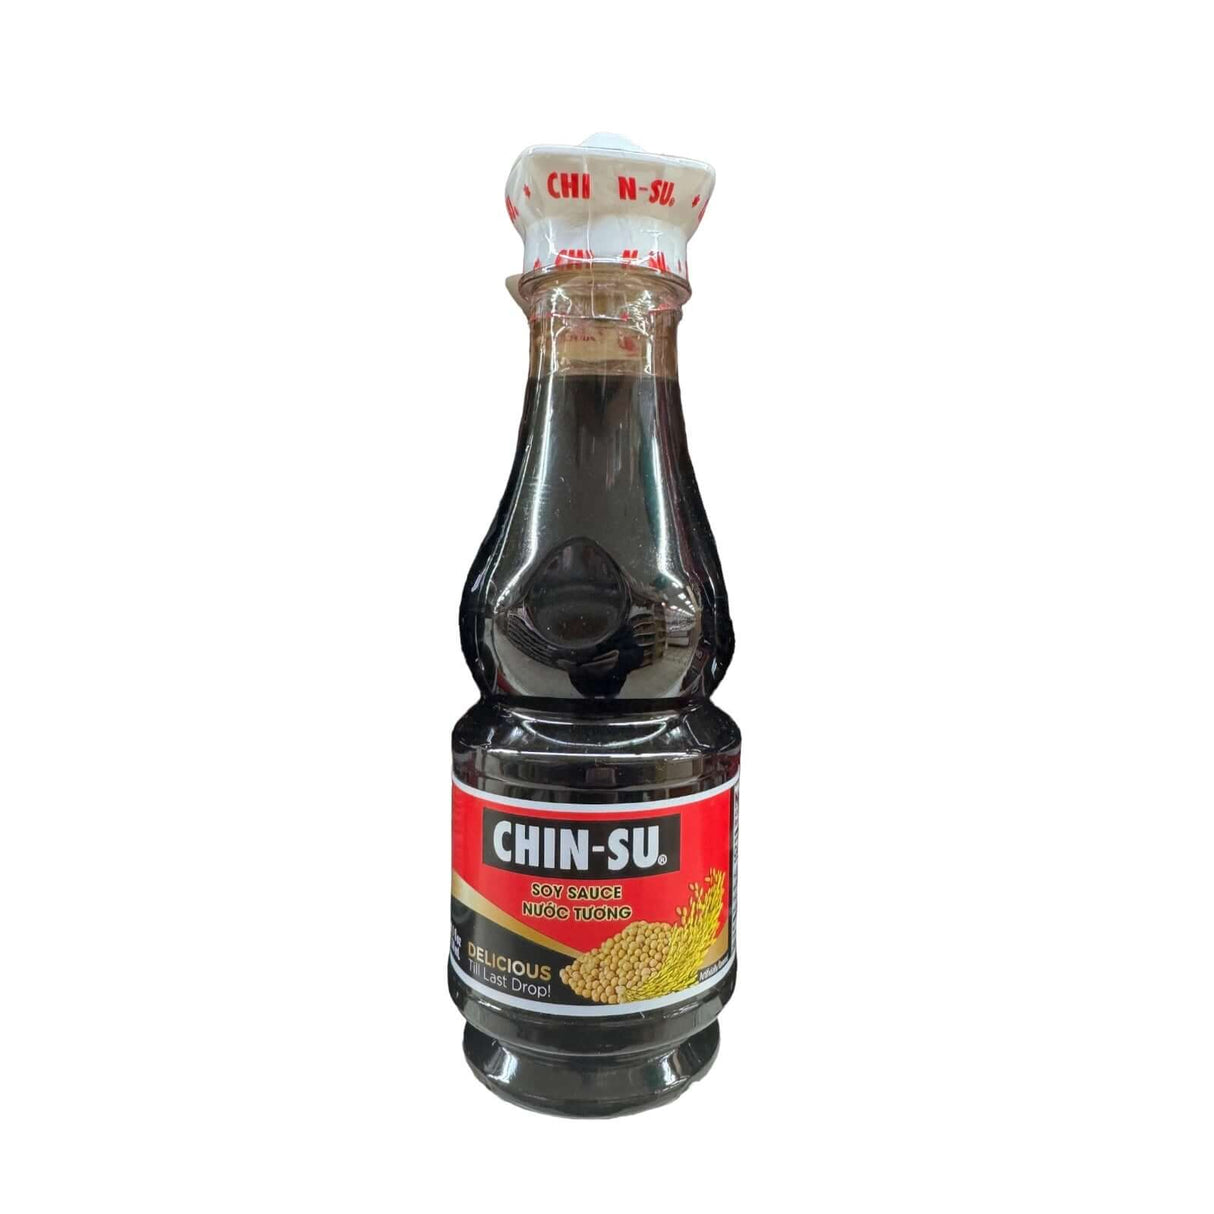 Chin-Su Soy Sauce